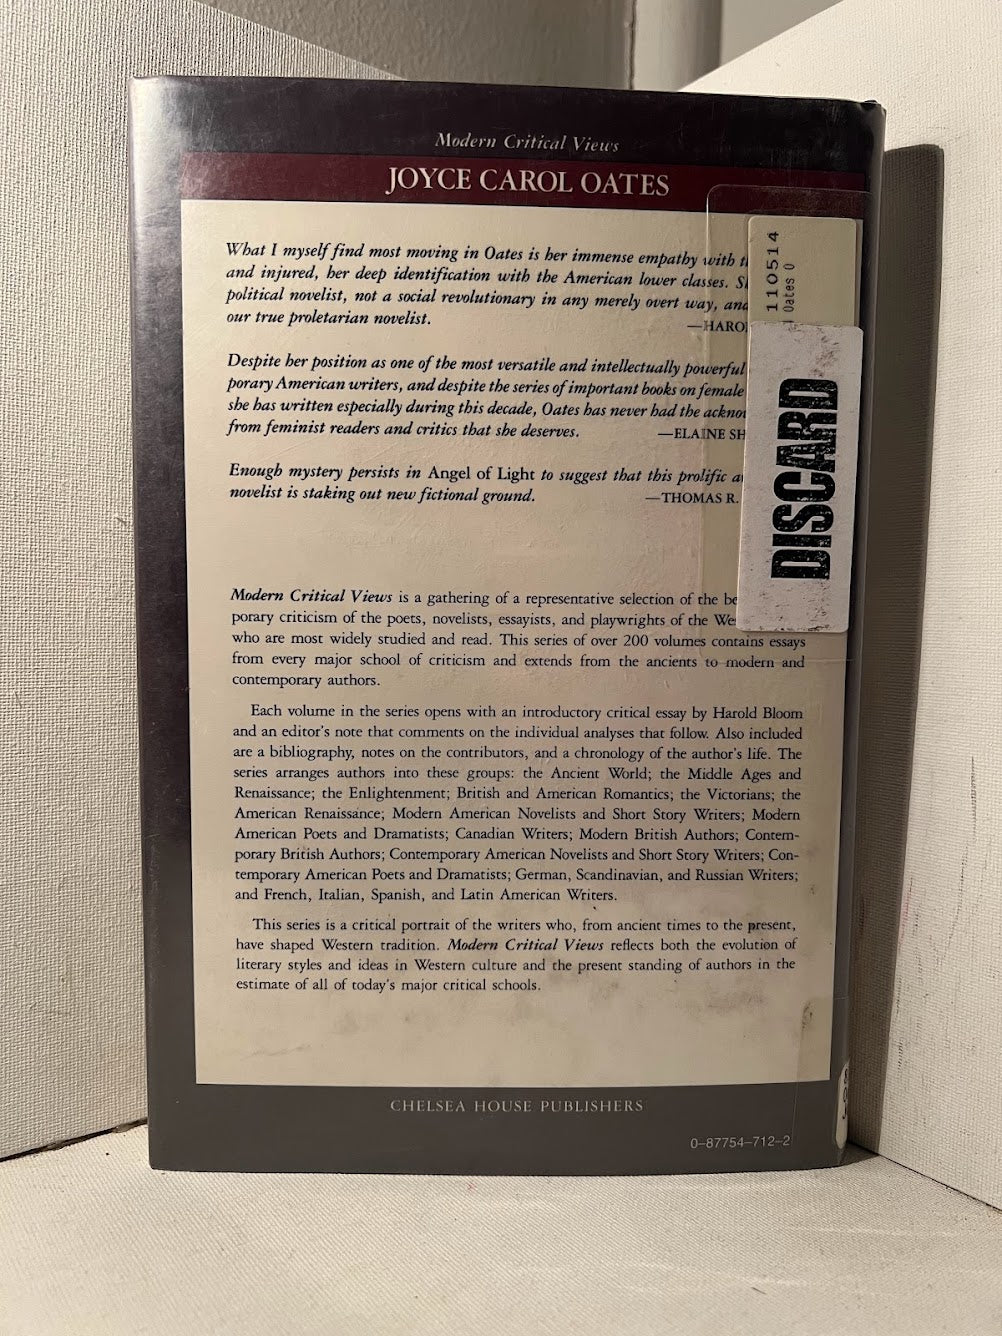 Joyce Carol Oates edited by Harold Bloom